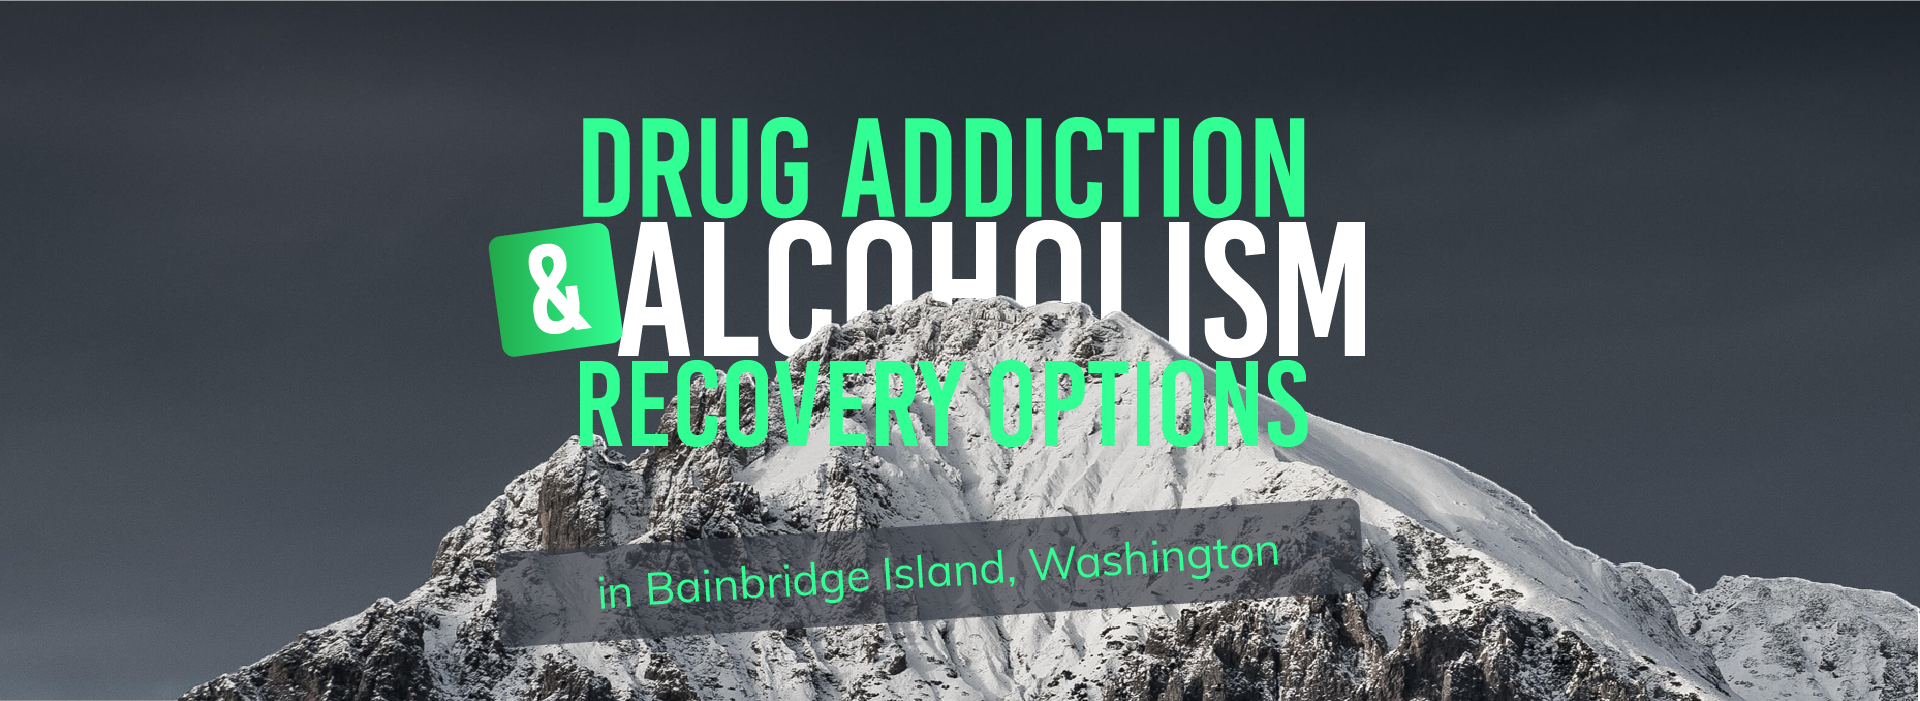 Bainbridge Island, Washington Resources